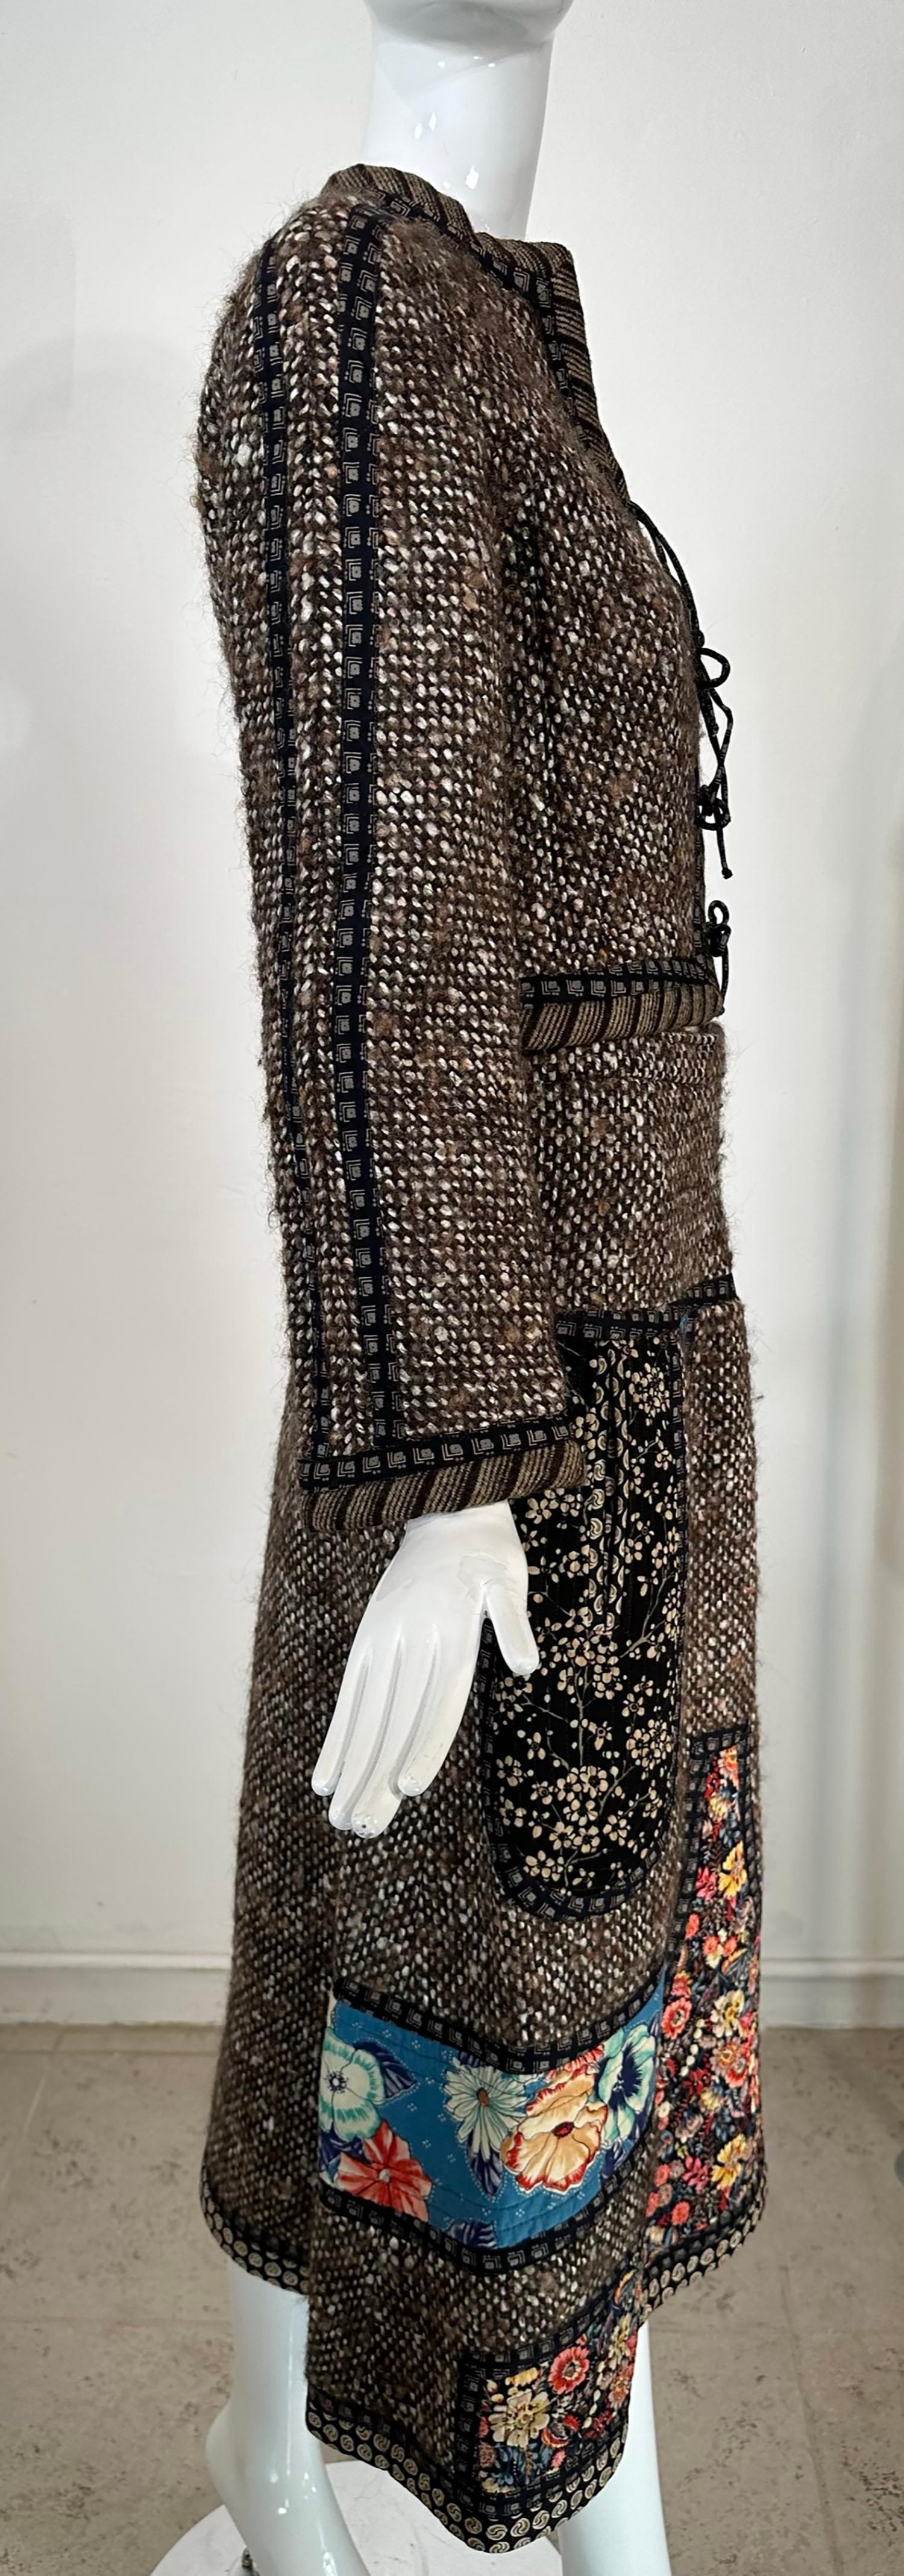 Women's Koos van den Akker Wool & Quilted Cotton Print Cropped Jacket & Skirt Set 1970s